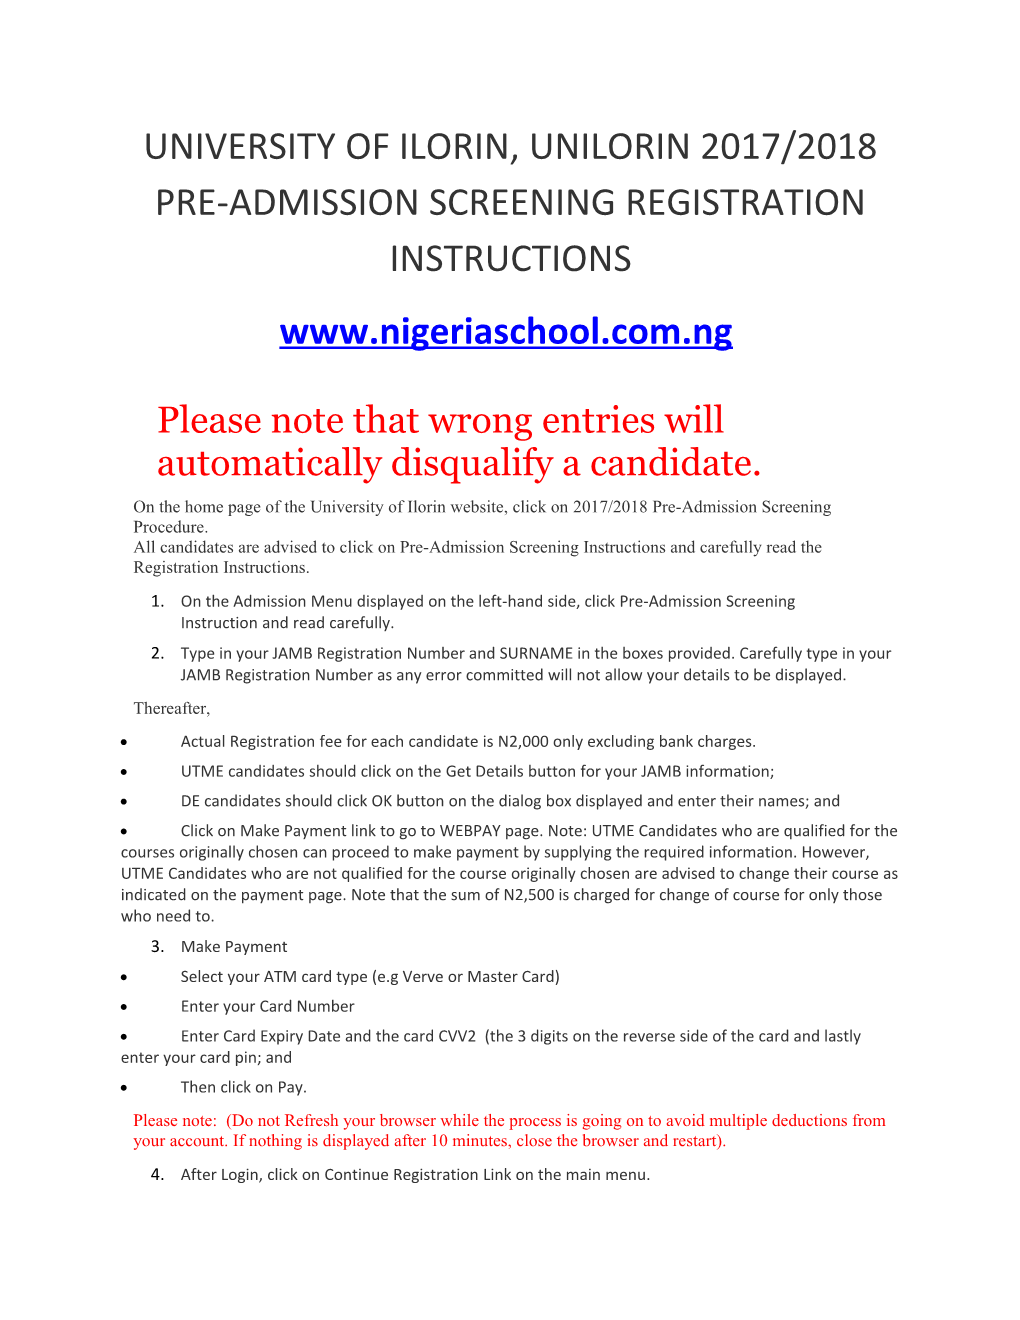 University of Ilorin, Unilorin 2017/2018 Pre-Admission Screening Registration Instructions